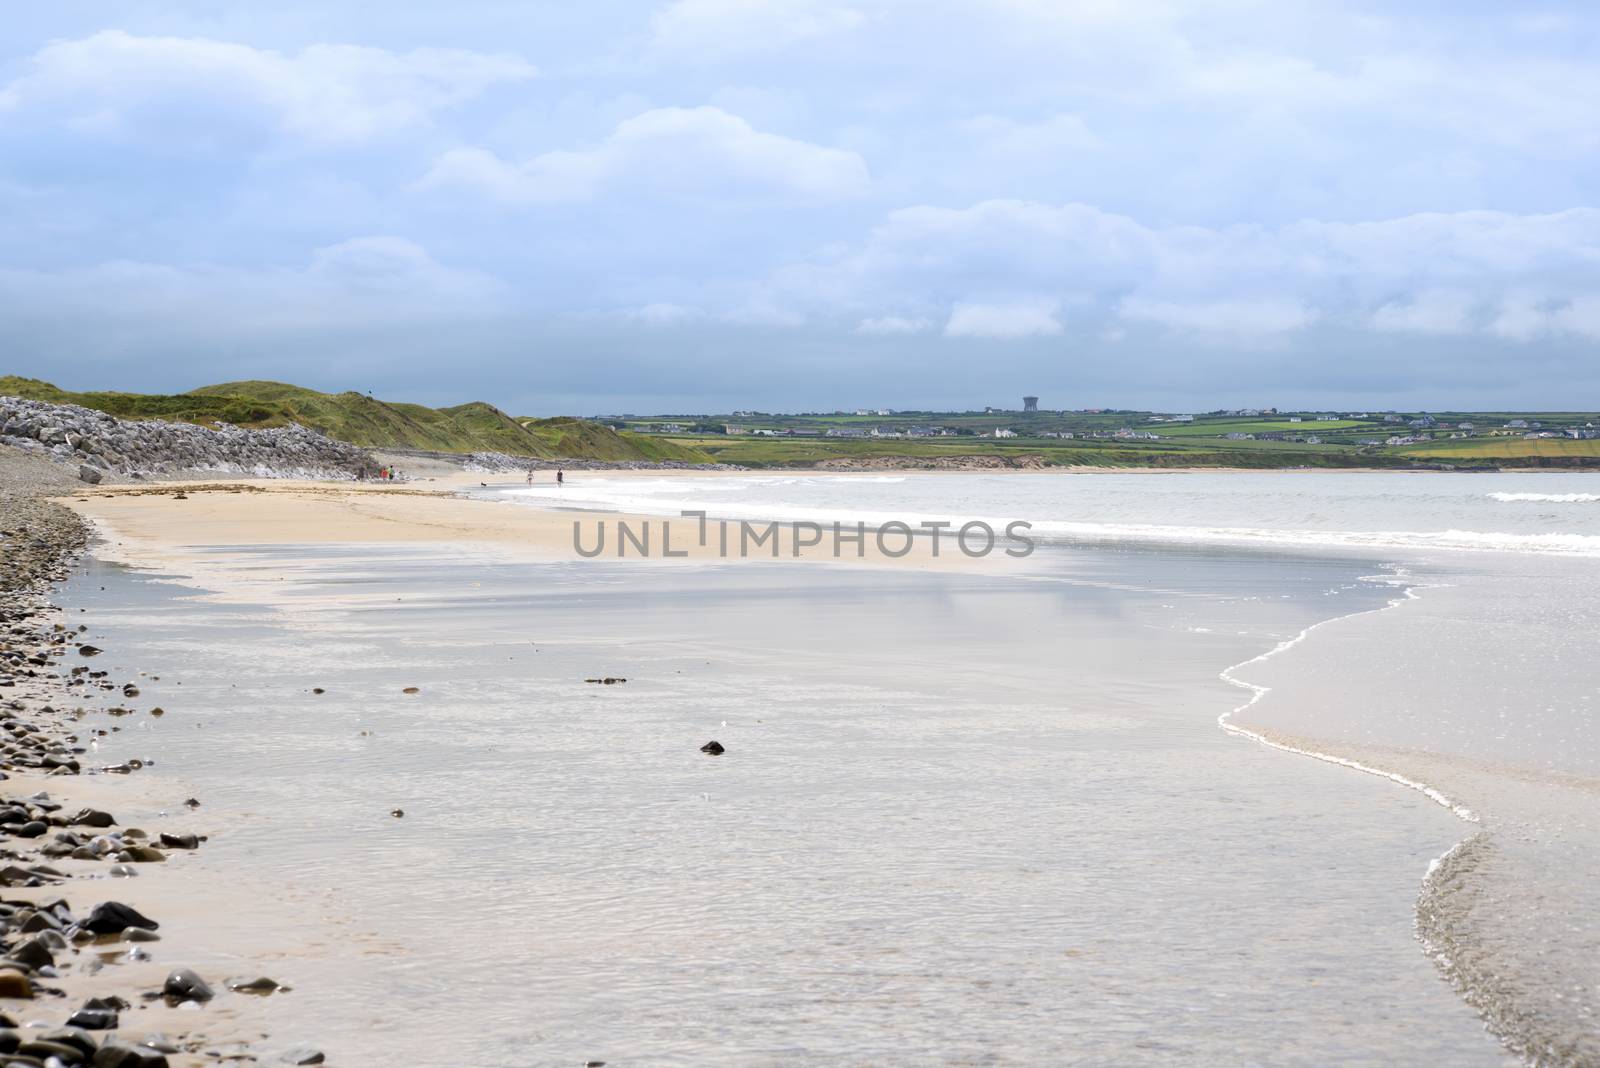 sandy ballybunion beach beside the links golf course in county kerry ireland